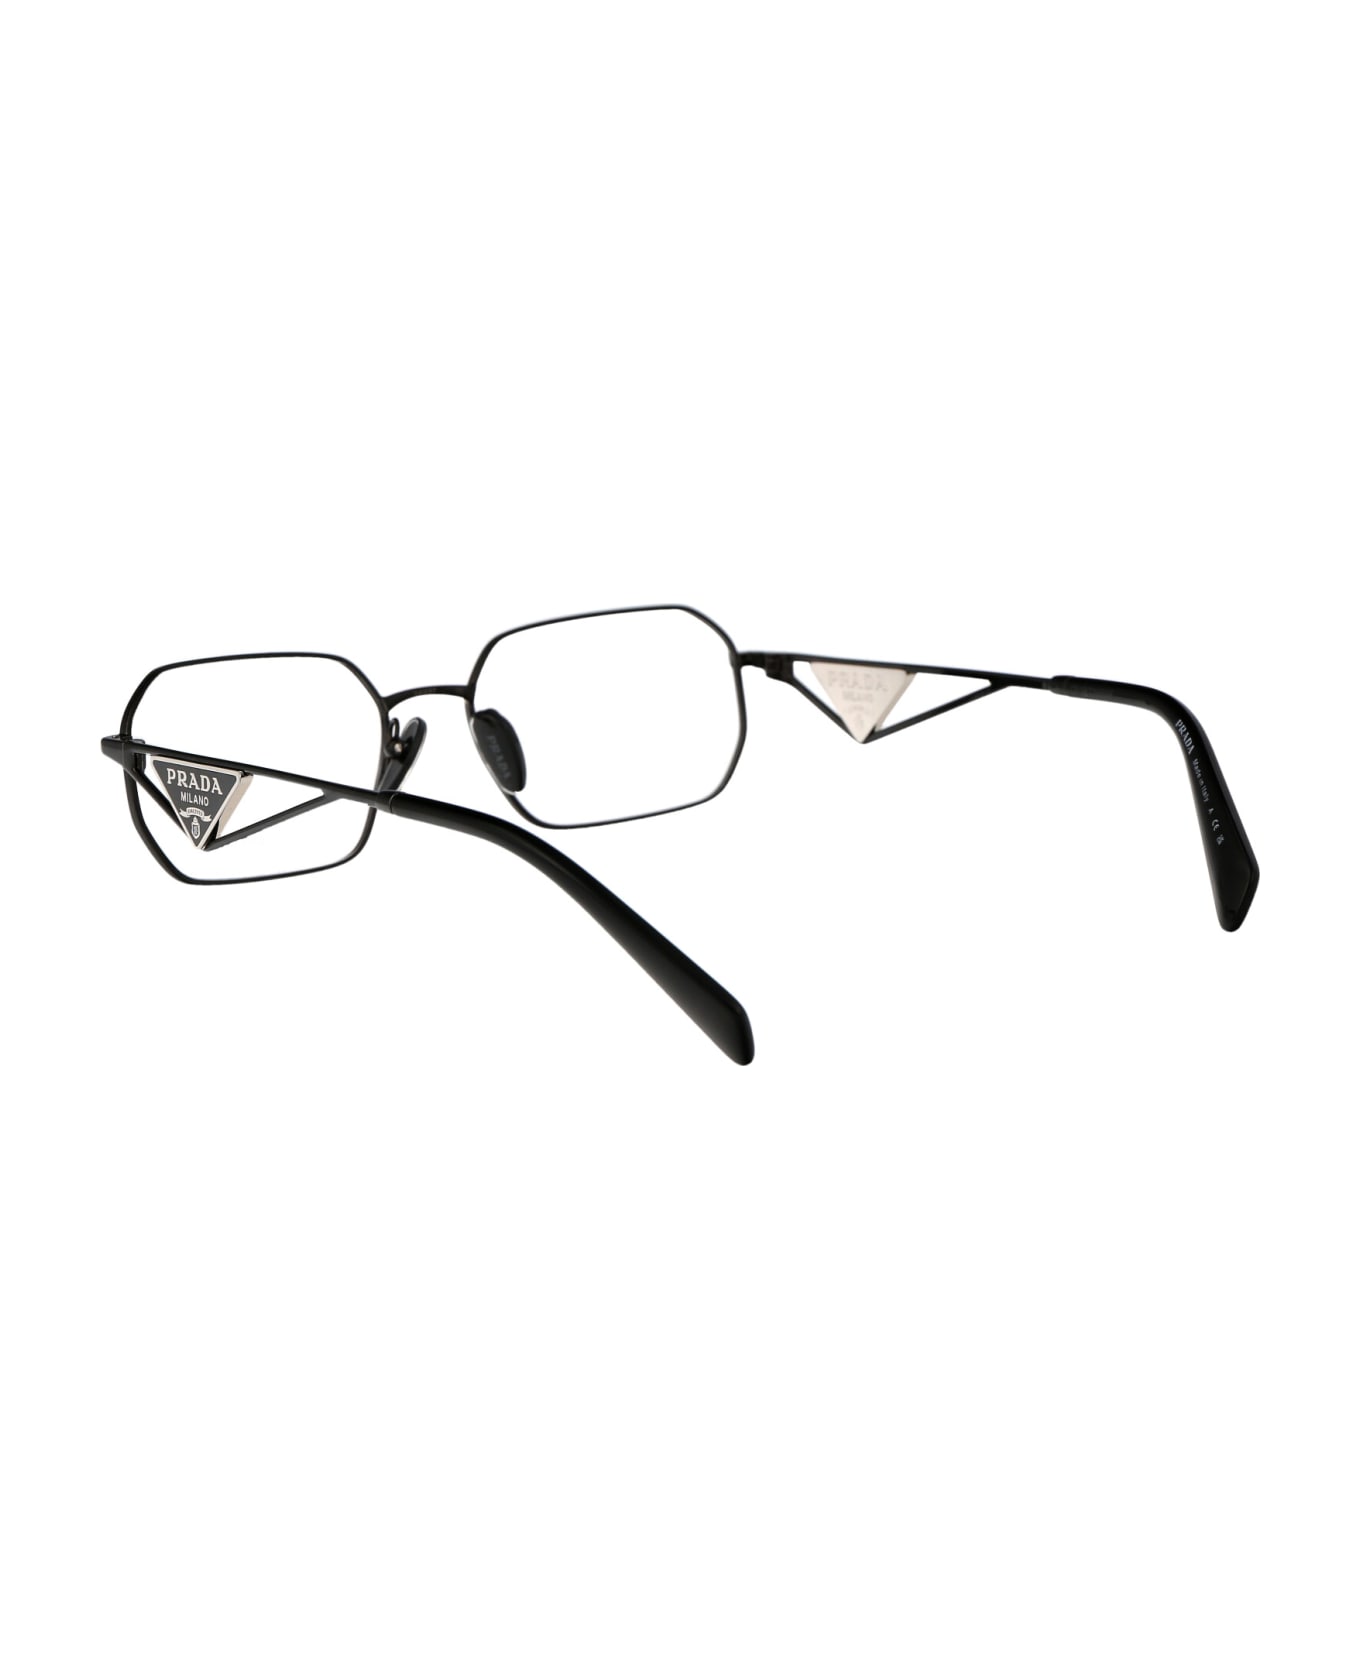 Prada Eyewear 0pr A53v Glasses - 1AB1O1 BLACK